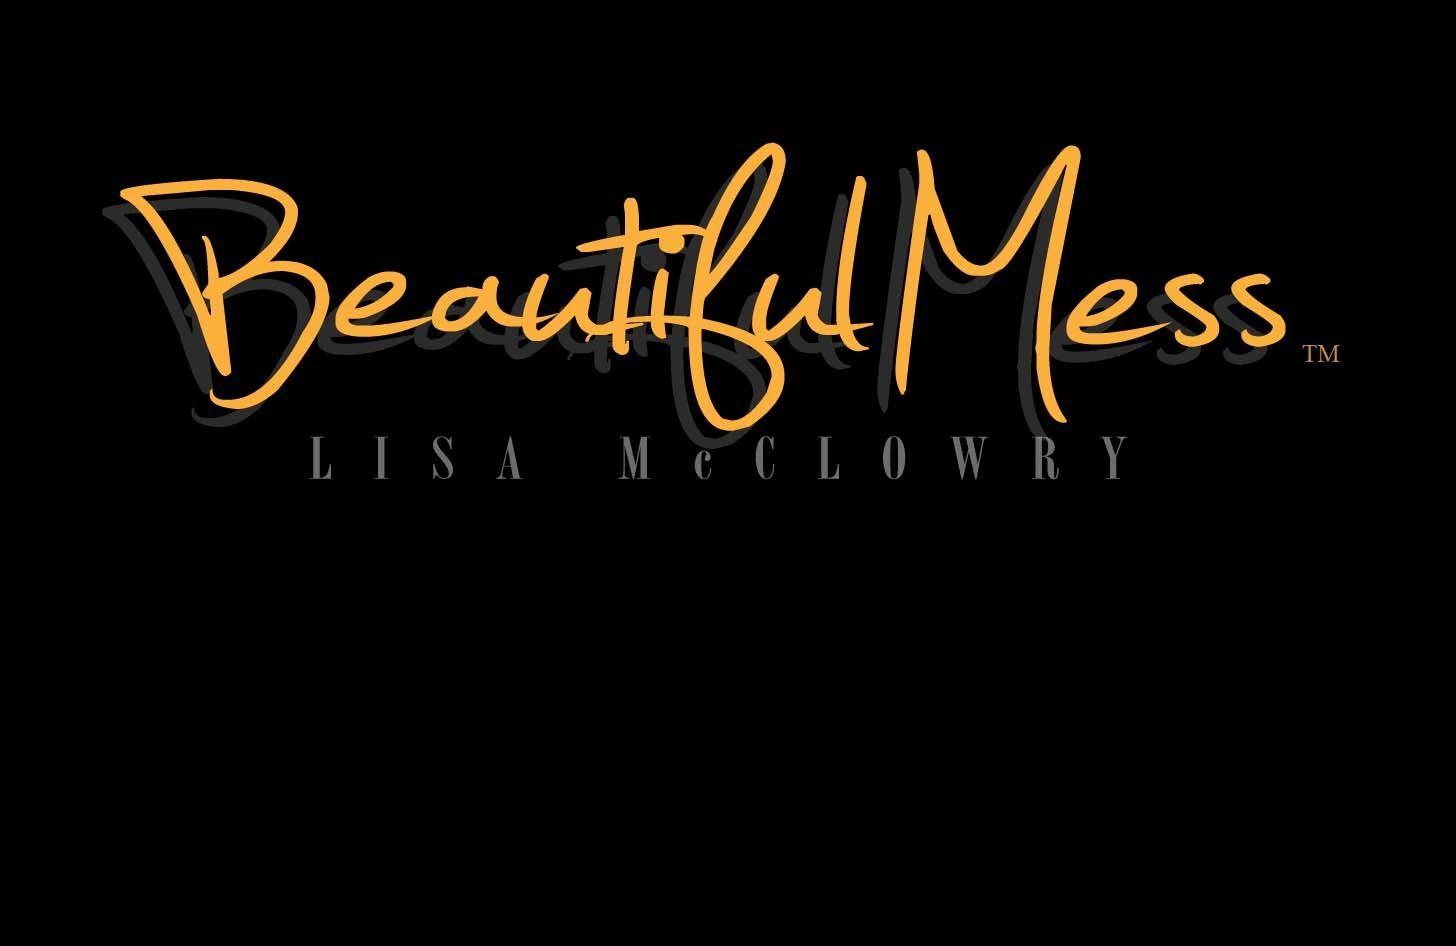 Lisa McClowry "Beautiful Mess" logo.